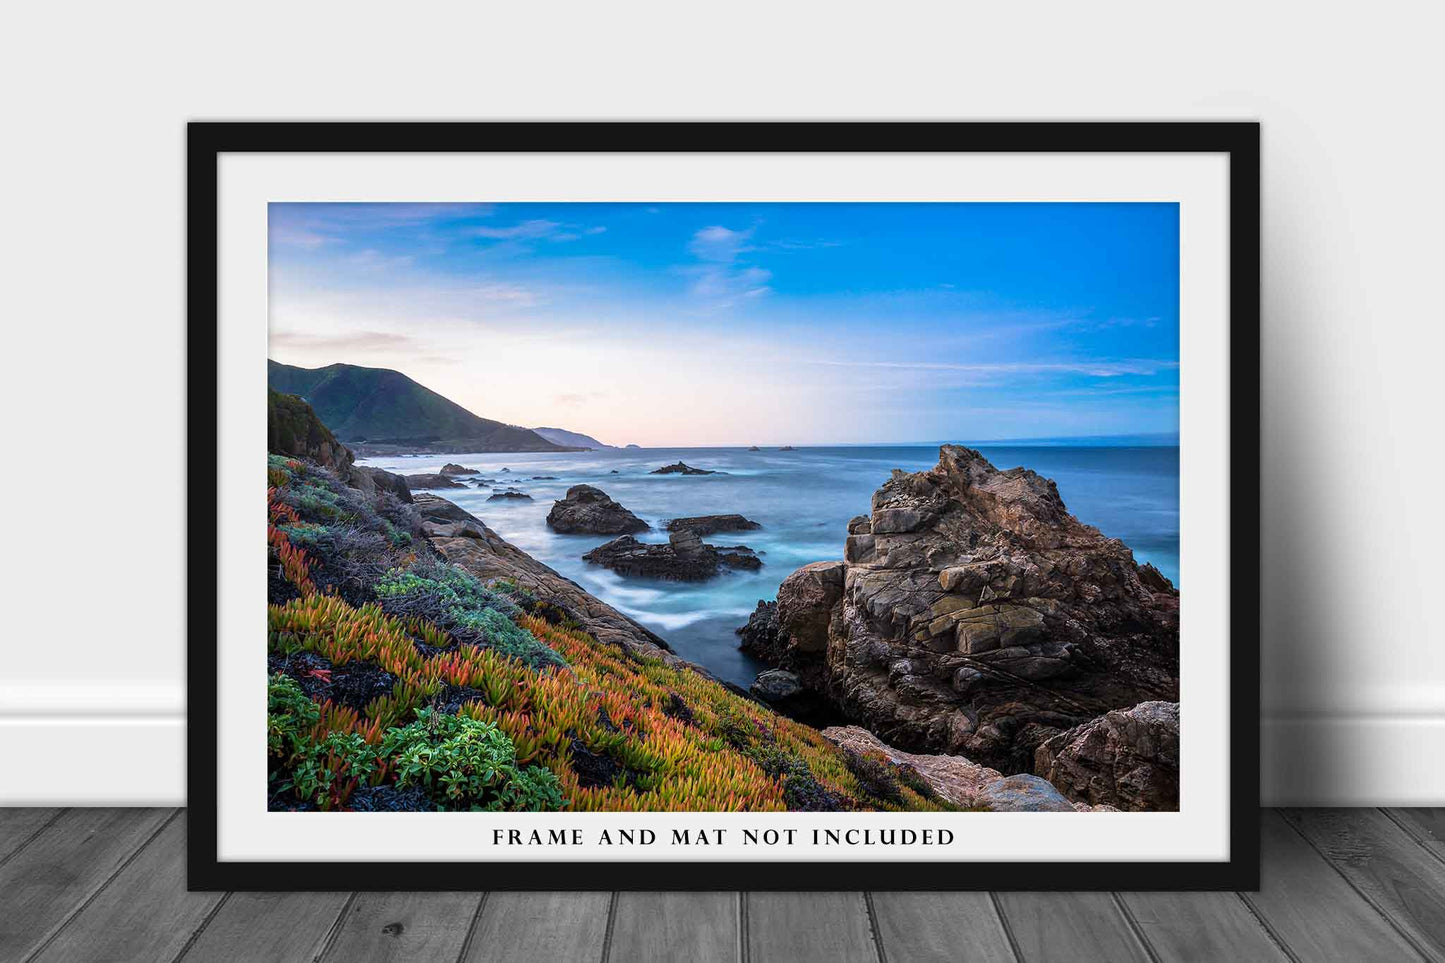 Coastal Wall Art - Picture of Colorful Succulents Along Coast at Sunrise in Big Sur California - Beach and Ocean Photo Artwork Decor